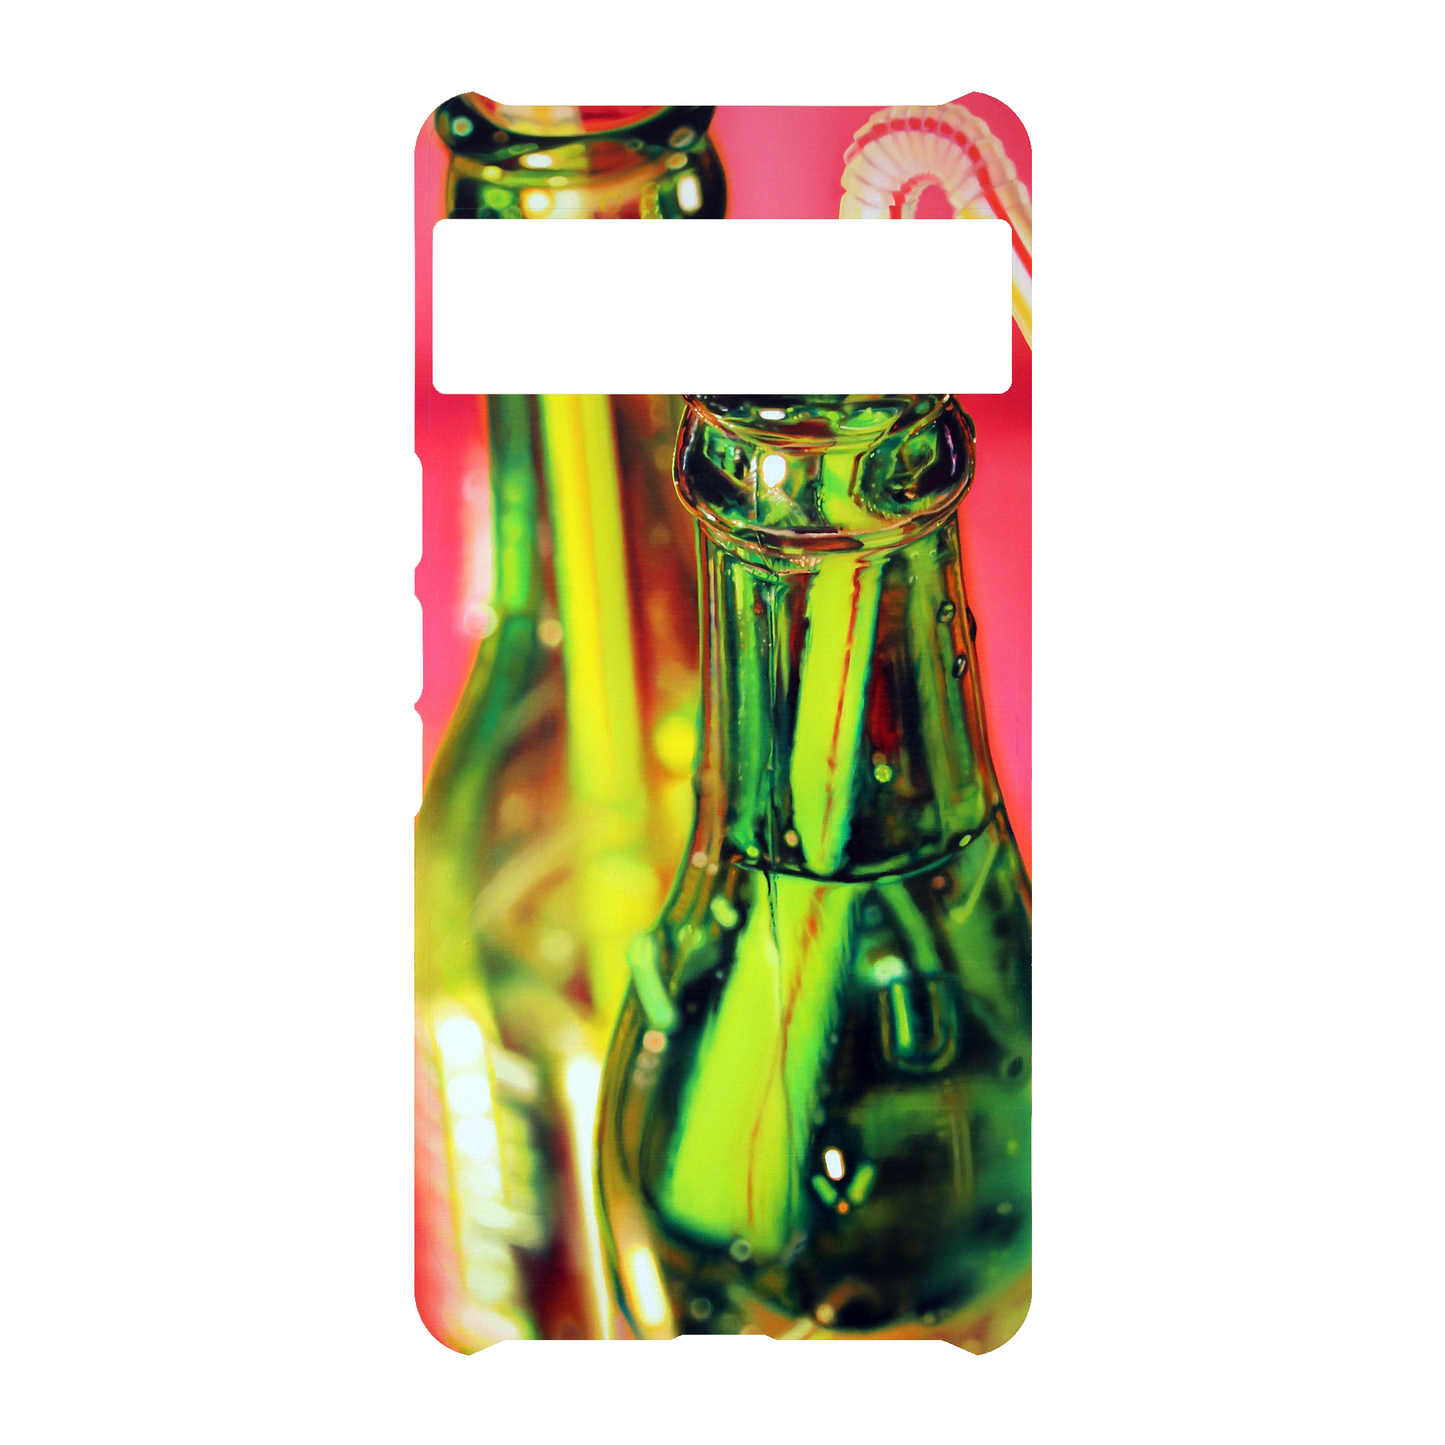 Two Green Bottles Snap Phone Case - alternative phone models